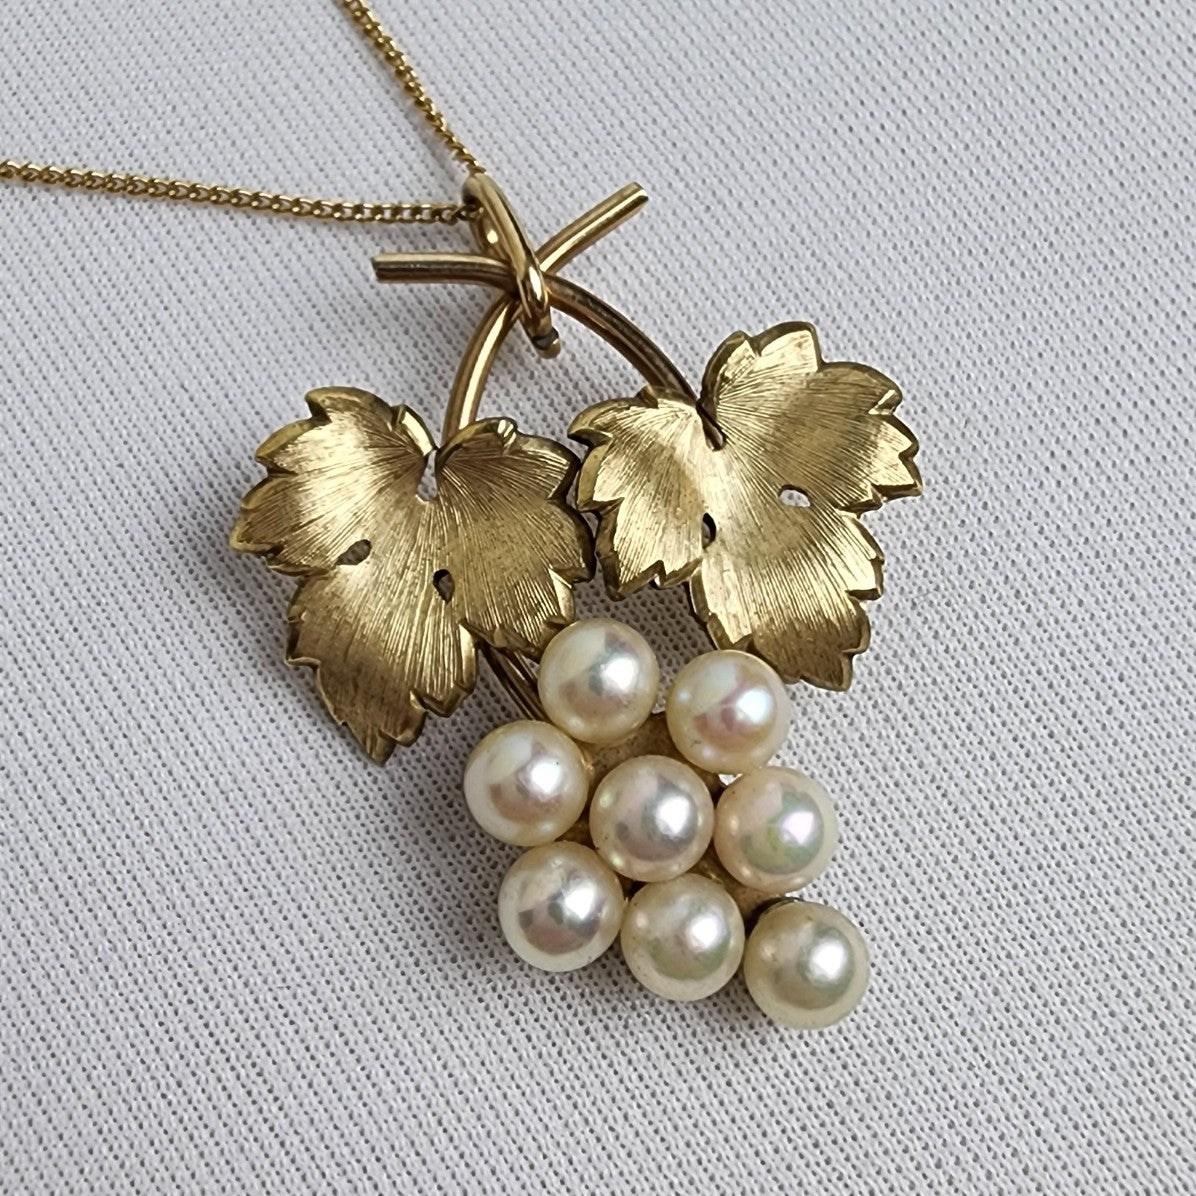 Vintage 1/20 12K Gold Fill Grapes Pendant Chain Necklace